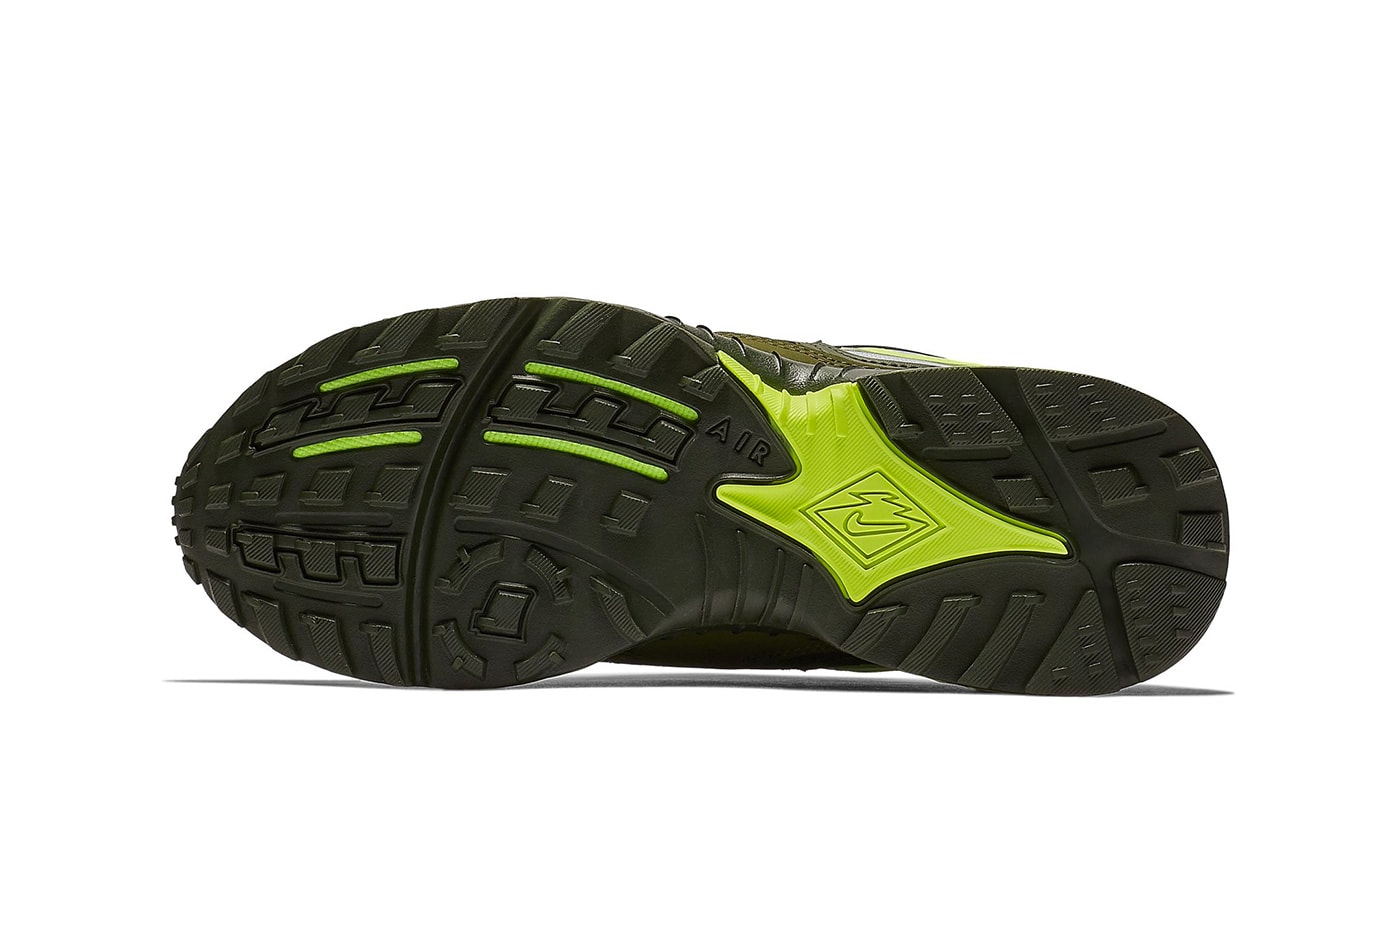 Nike Air Terra Humara '18 "Olive/Volt Glow" Floral lining sneaker release date women's price colorway